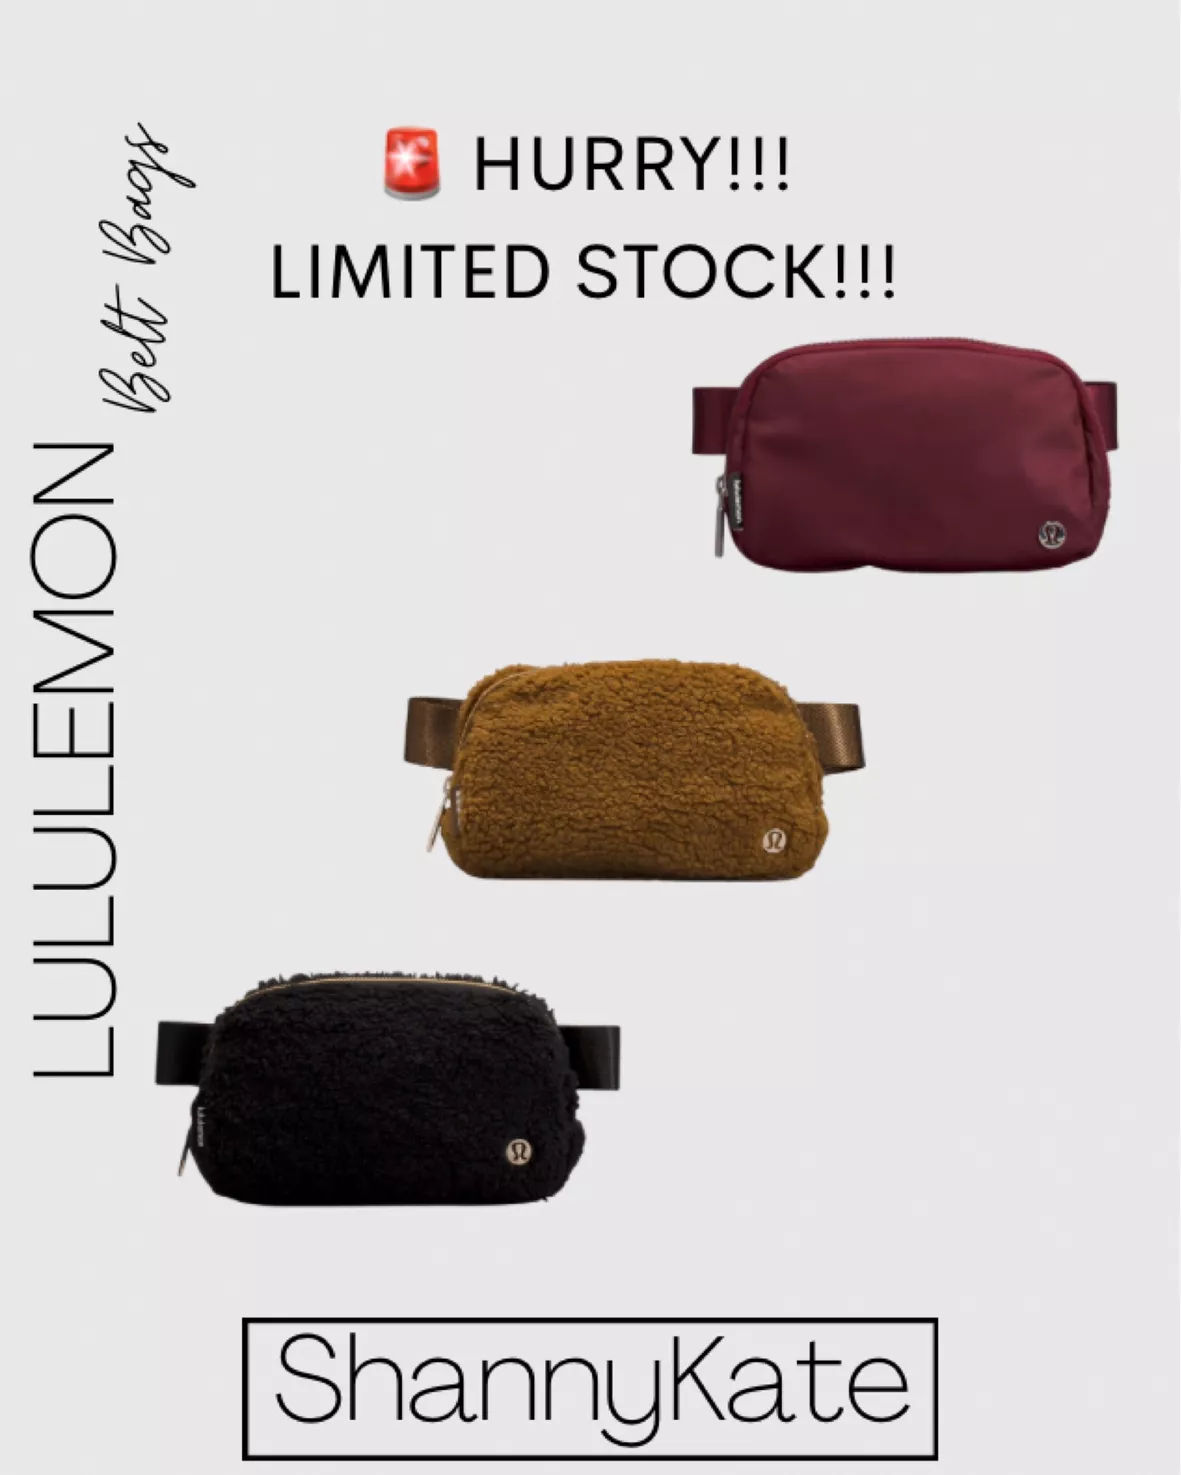 lululemon Everywhere Fleece Belt Bag Is Back in Stock - Shop